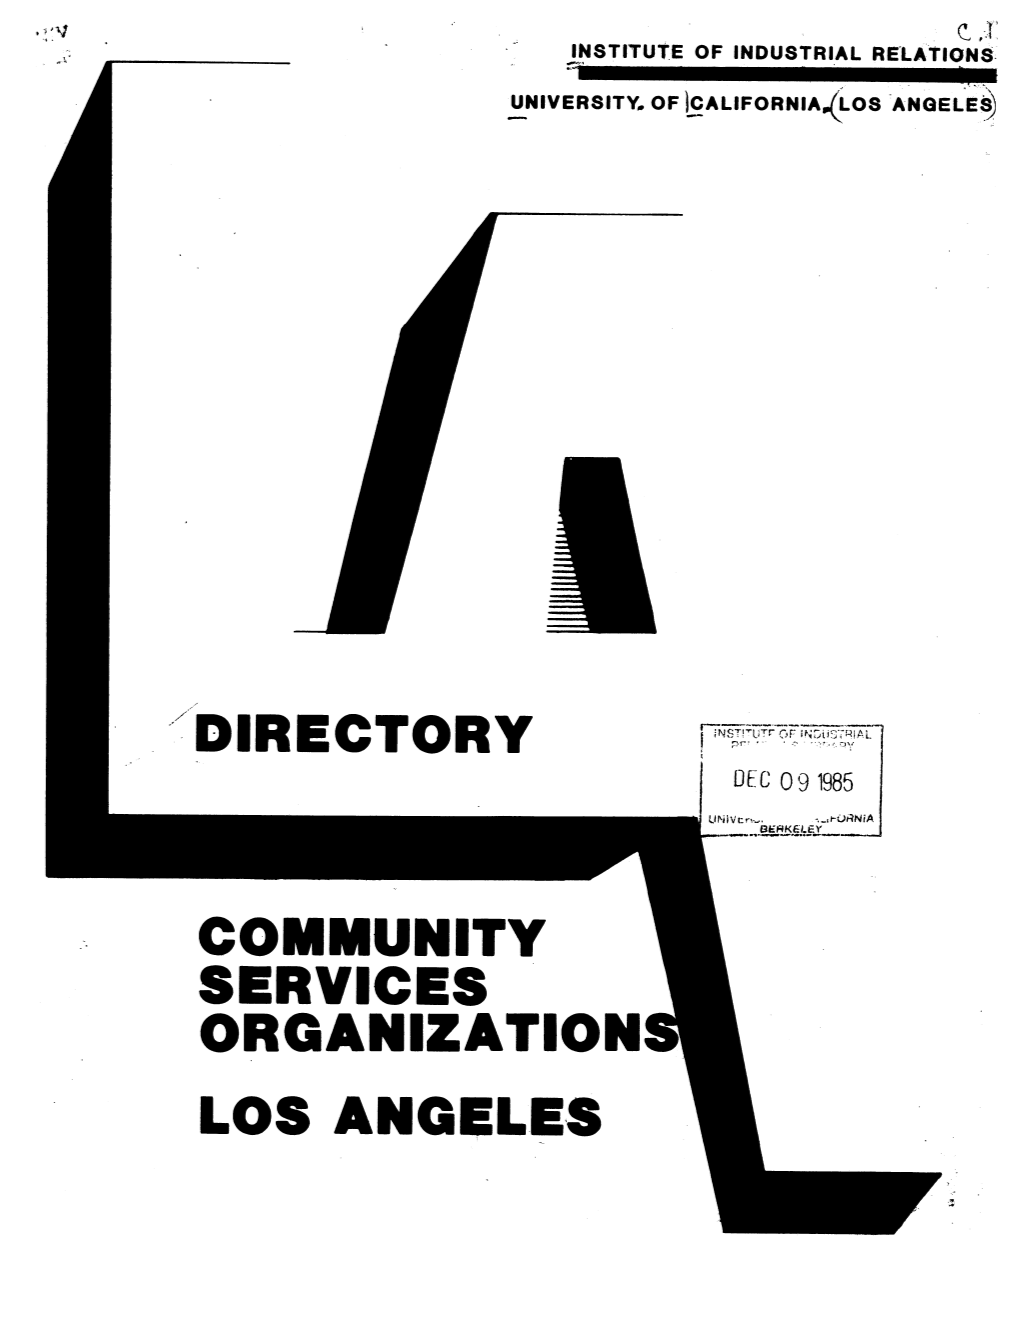 Community Services Organization Los Angeles 1985